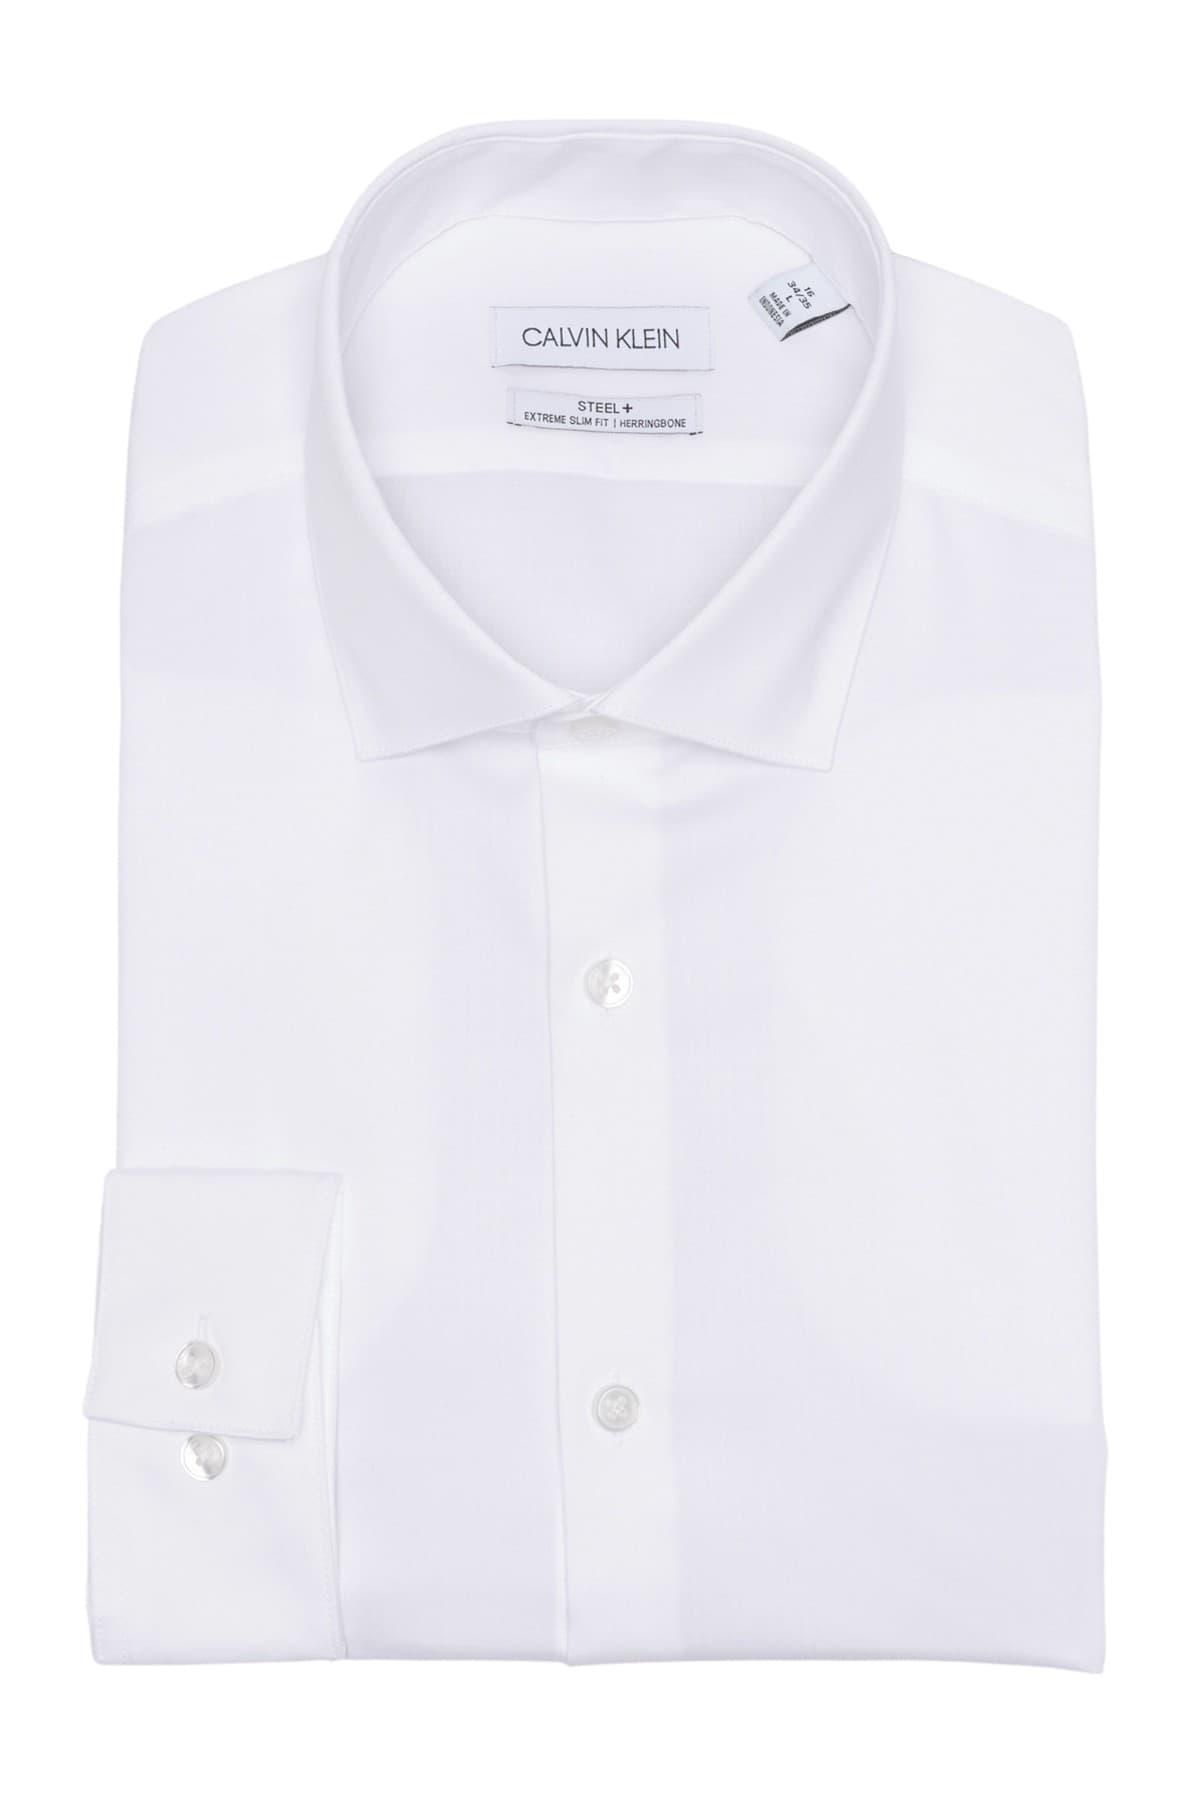 Calvin Klein Cotton Steel Extra-slim Fit Non-iron Performance Herringbone Dress  Shirt in White for Men - Save 54% - Lyst